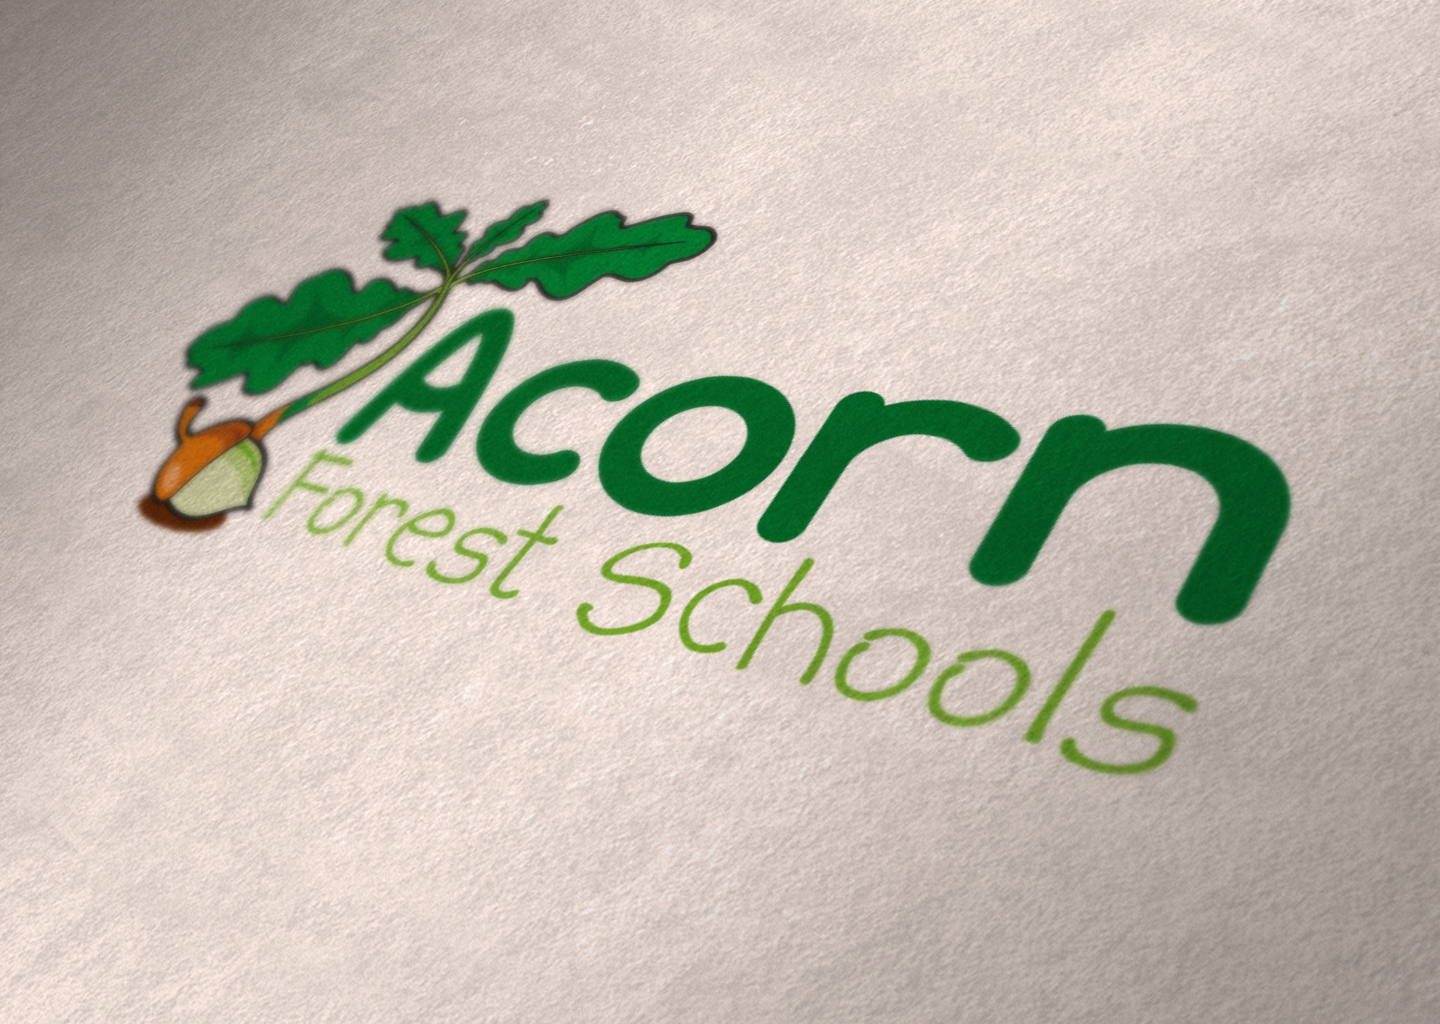 02_Acorn logos_Forest schools web